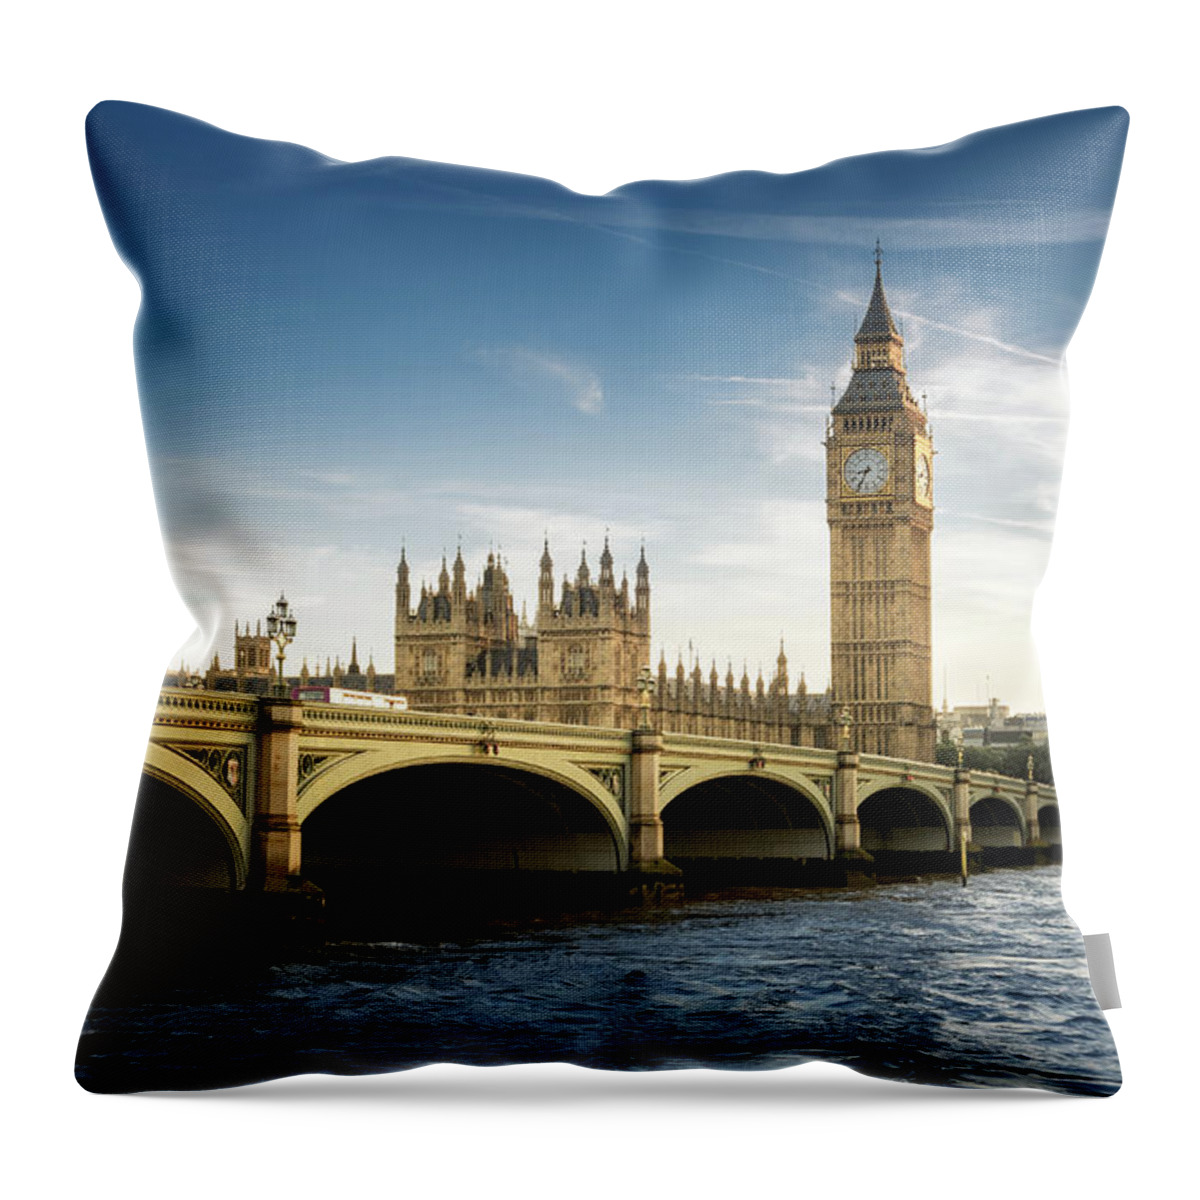 Clock Tower Throw Pillow featuring the photograph Big Ben, London by Tangman Photography